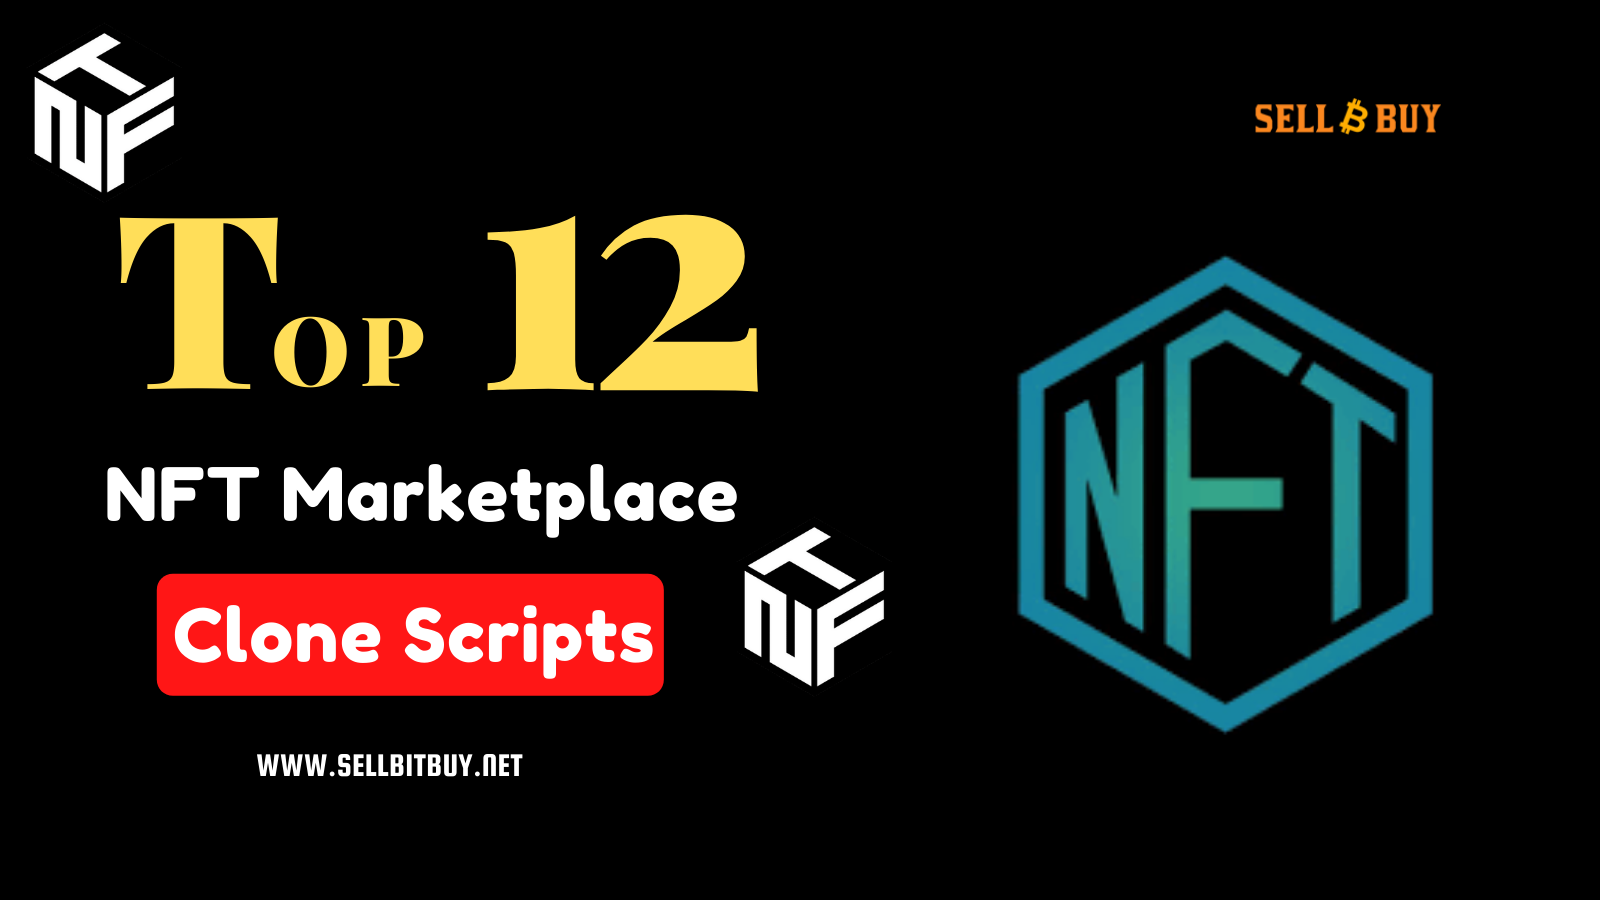 NFT Marketplace Clone Script - To Start A P2P NFT Marketplace Like OpenSea, Rarible, etc,